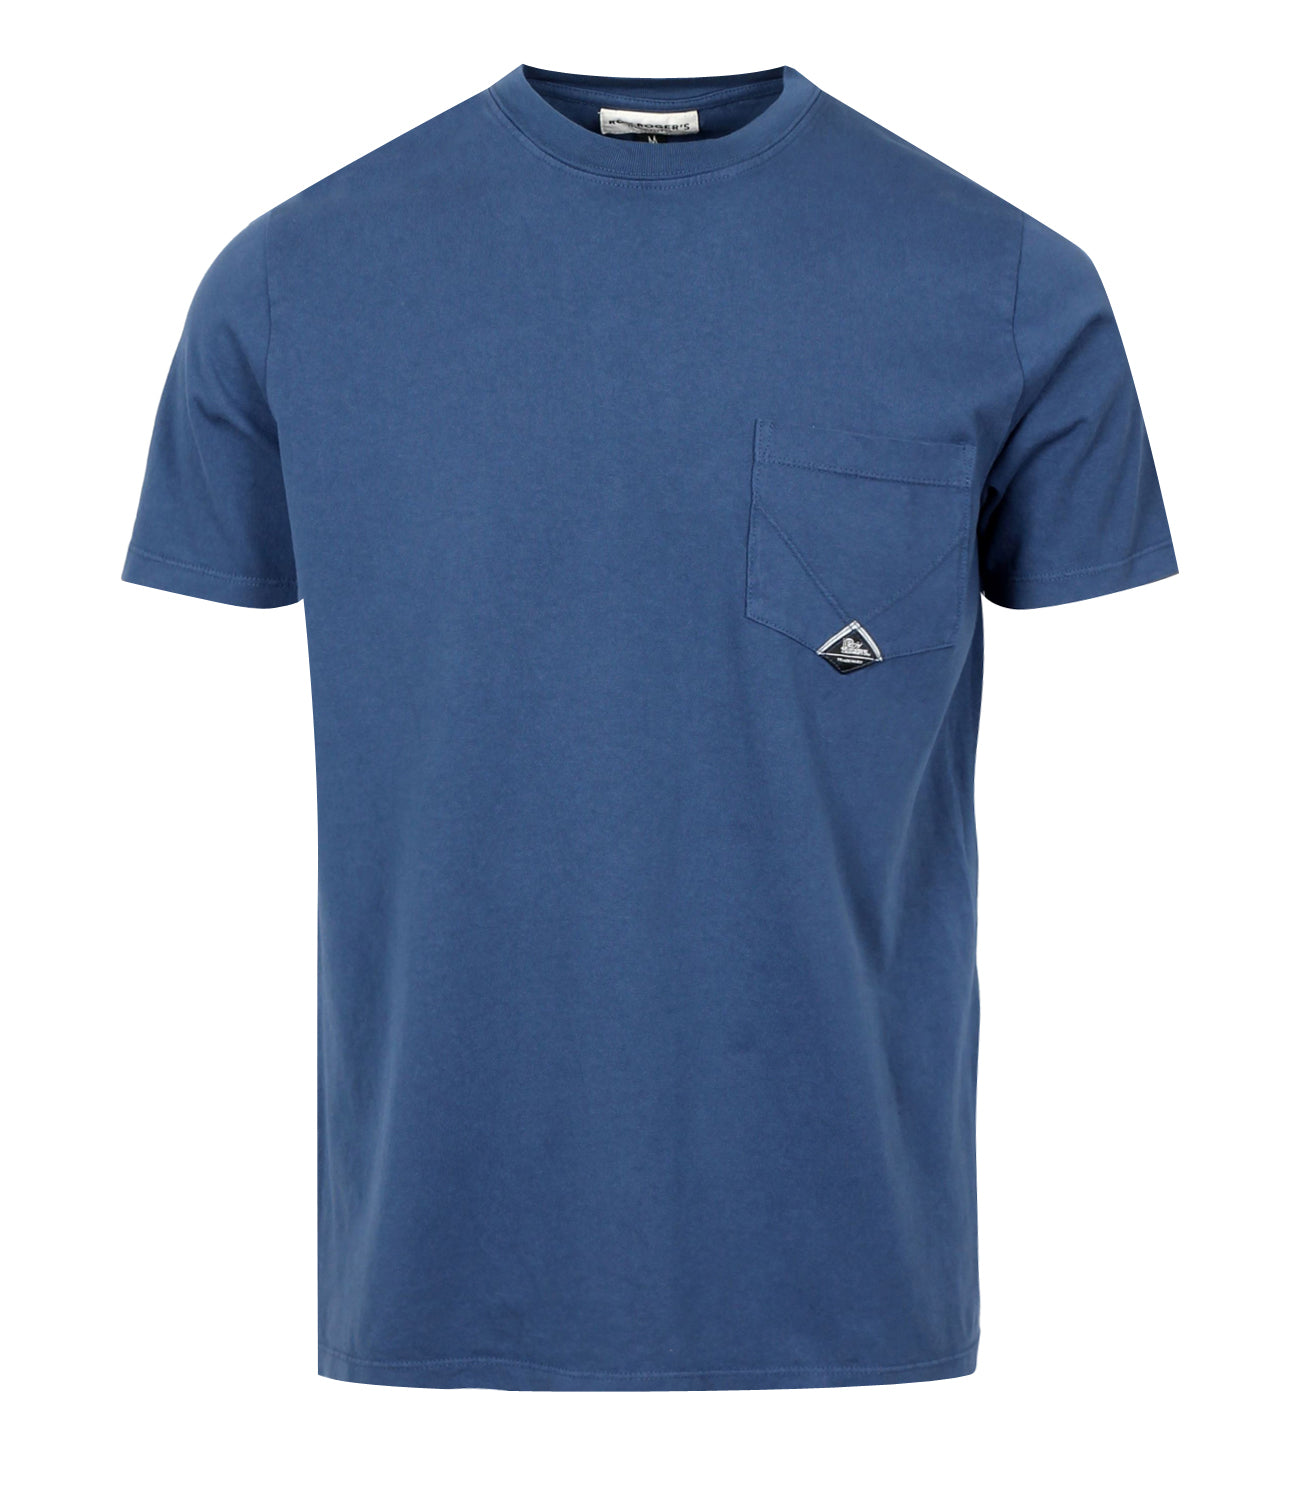 Roy Roger's | T-Shirt Pocket Indigo